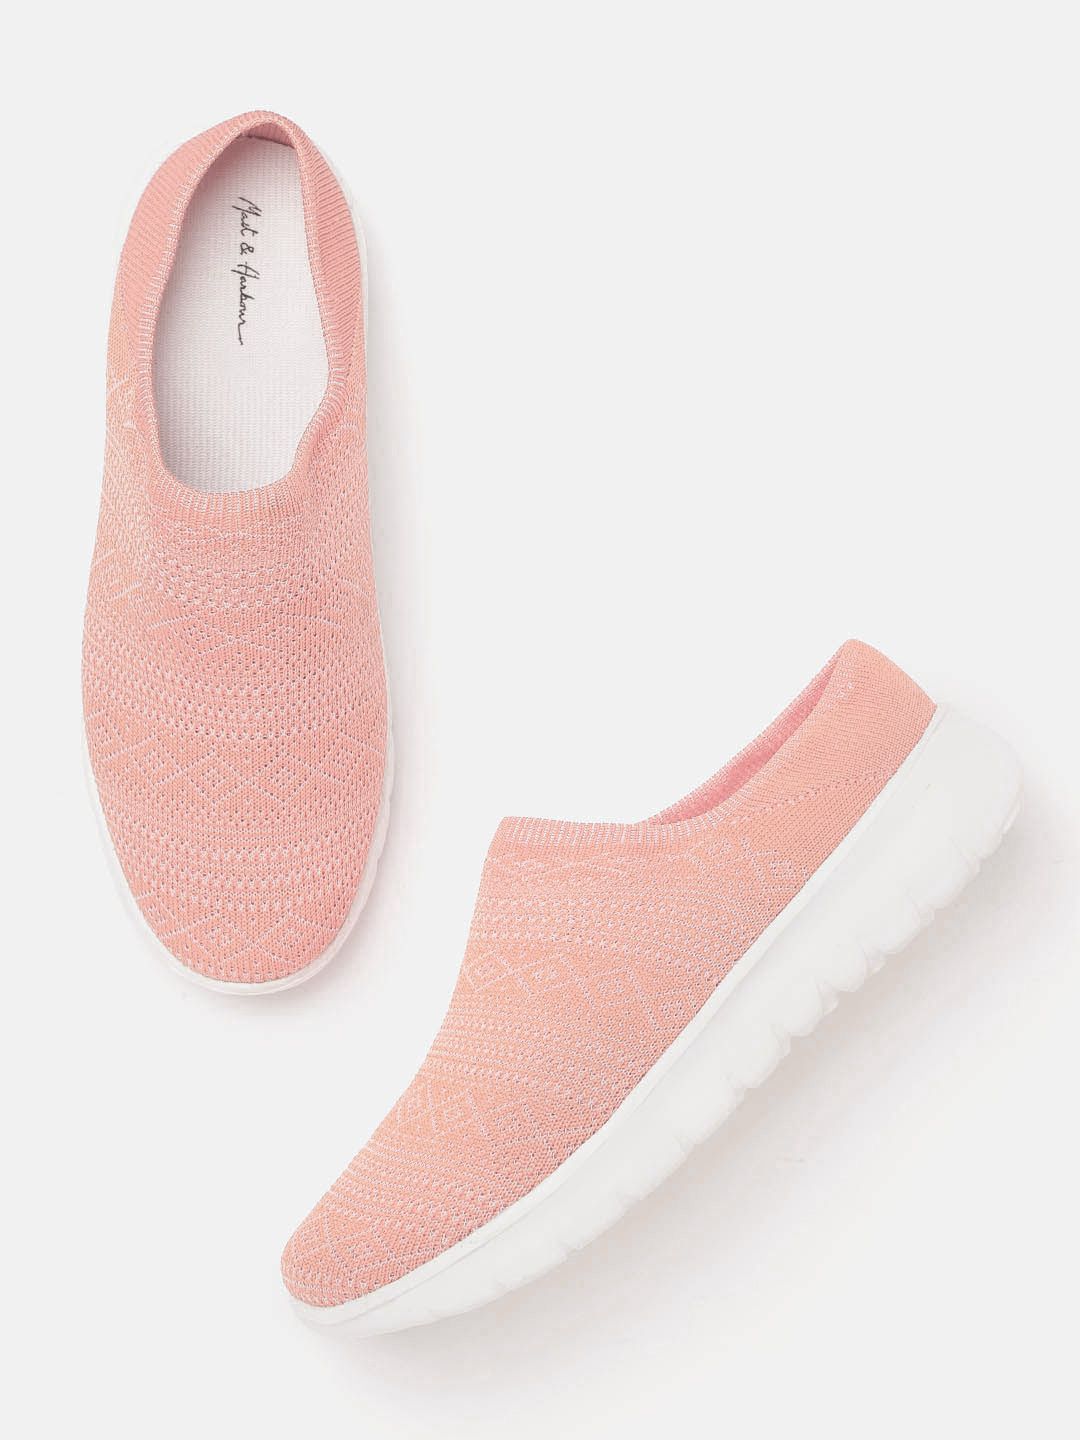 Mast & Harbour Women Pink Woven Design Sneakers Price in India